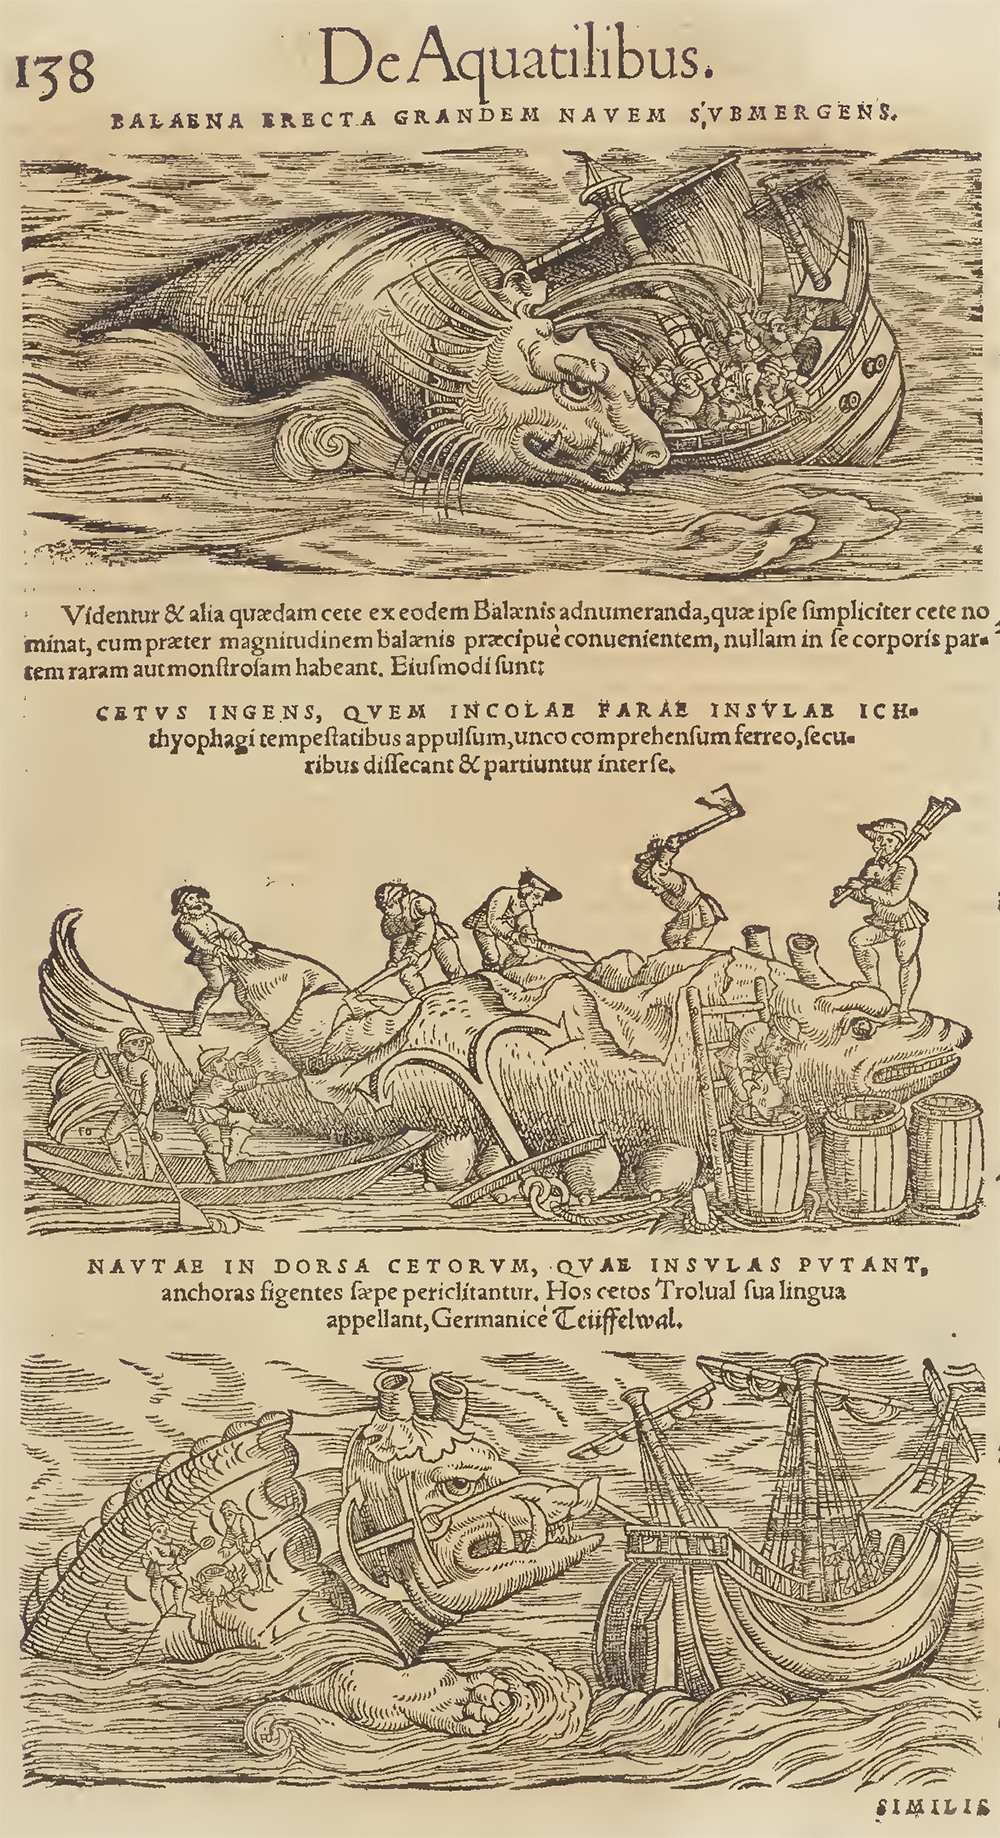 From Conrad Gessner, Historia animalium, vol. 4 (1557). The Internet Archive.